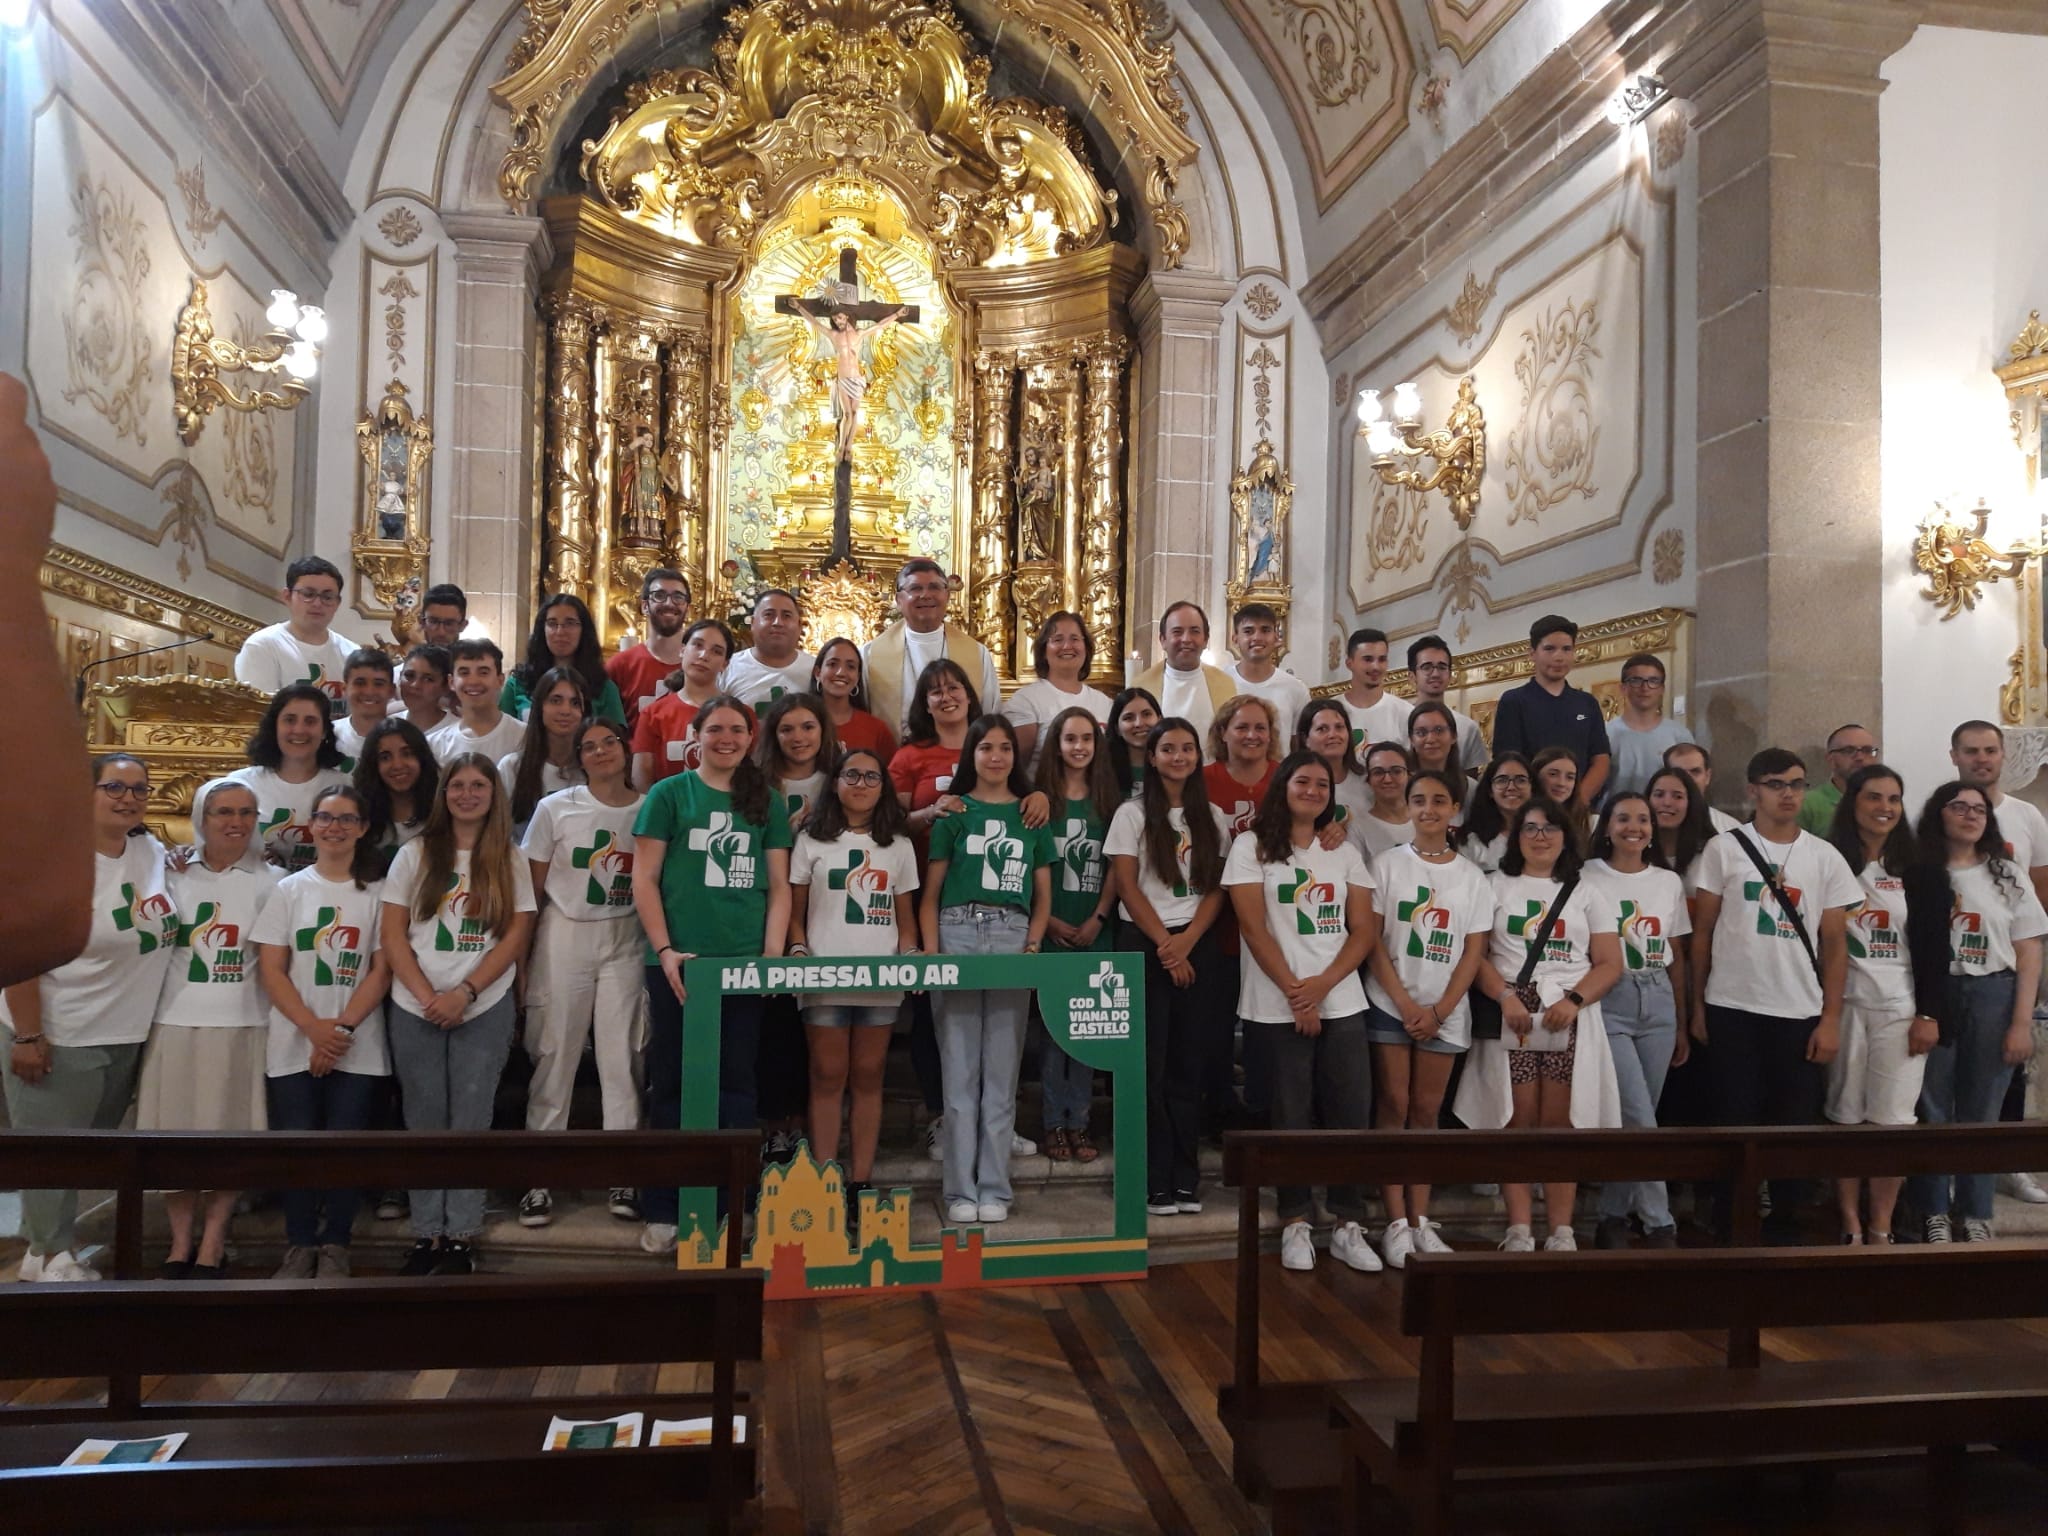 Jovens de Viana celebraram “Km 11” na igreja de Vila de Punhe